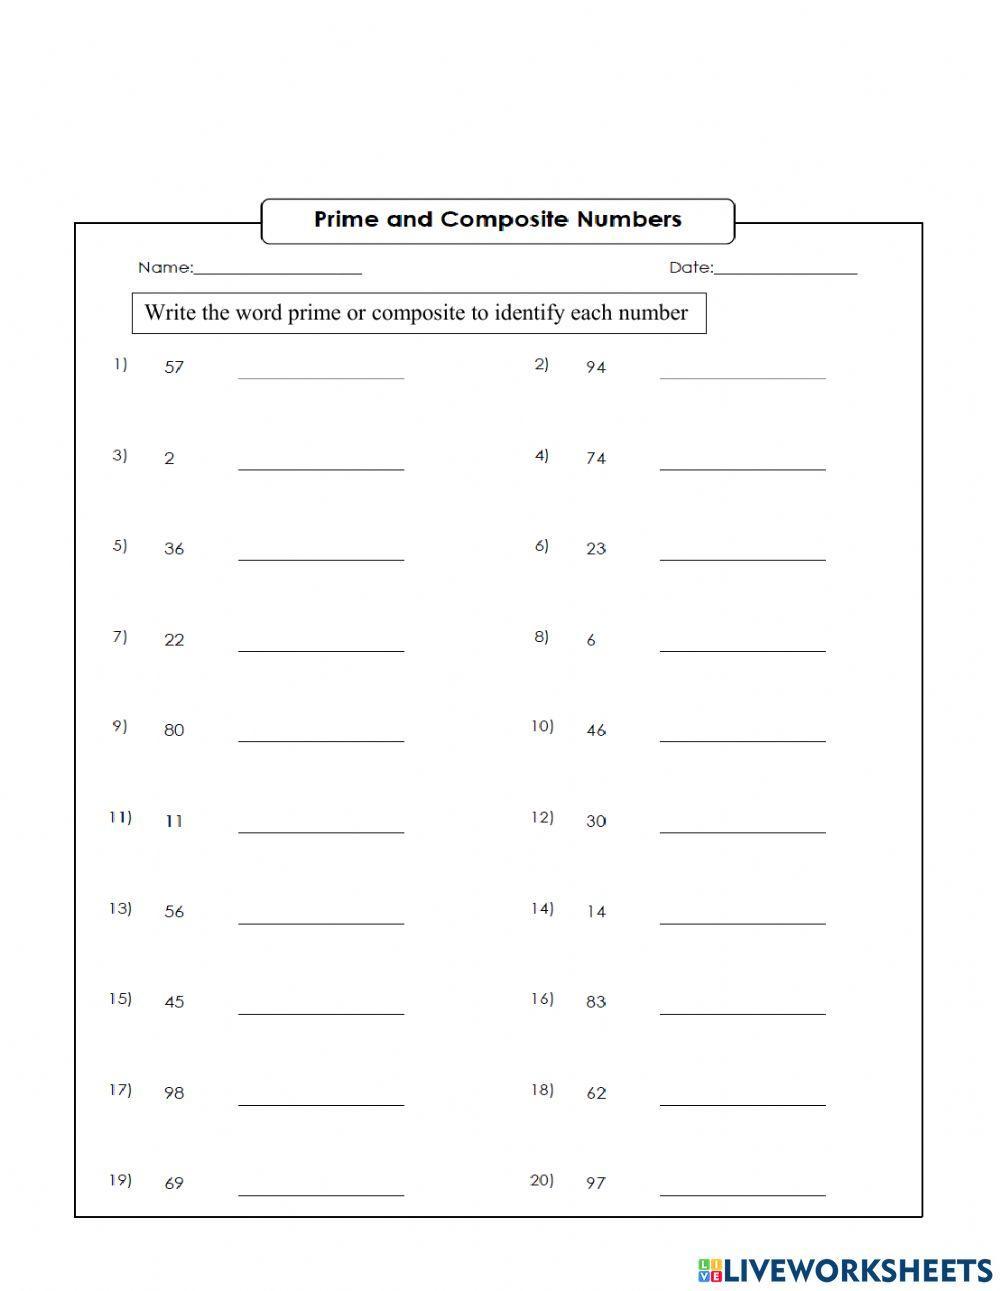 prime-and-composite-numbers-online-worksheet-live-worksheets